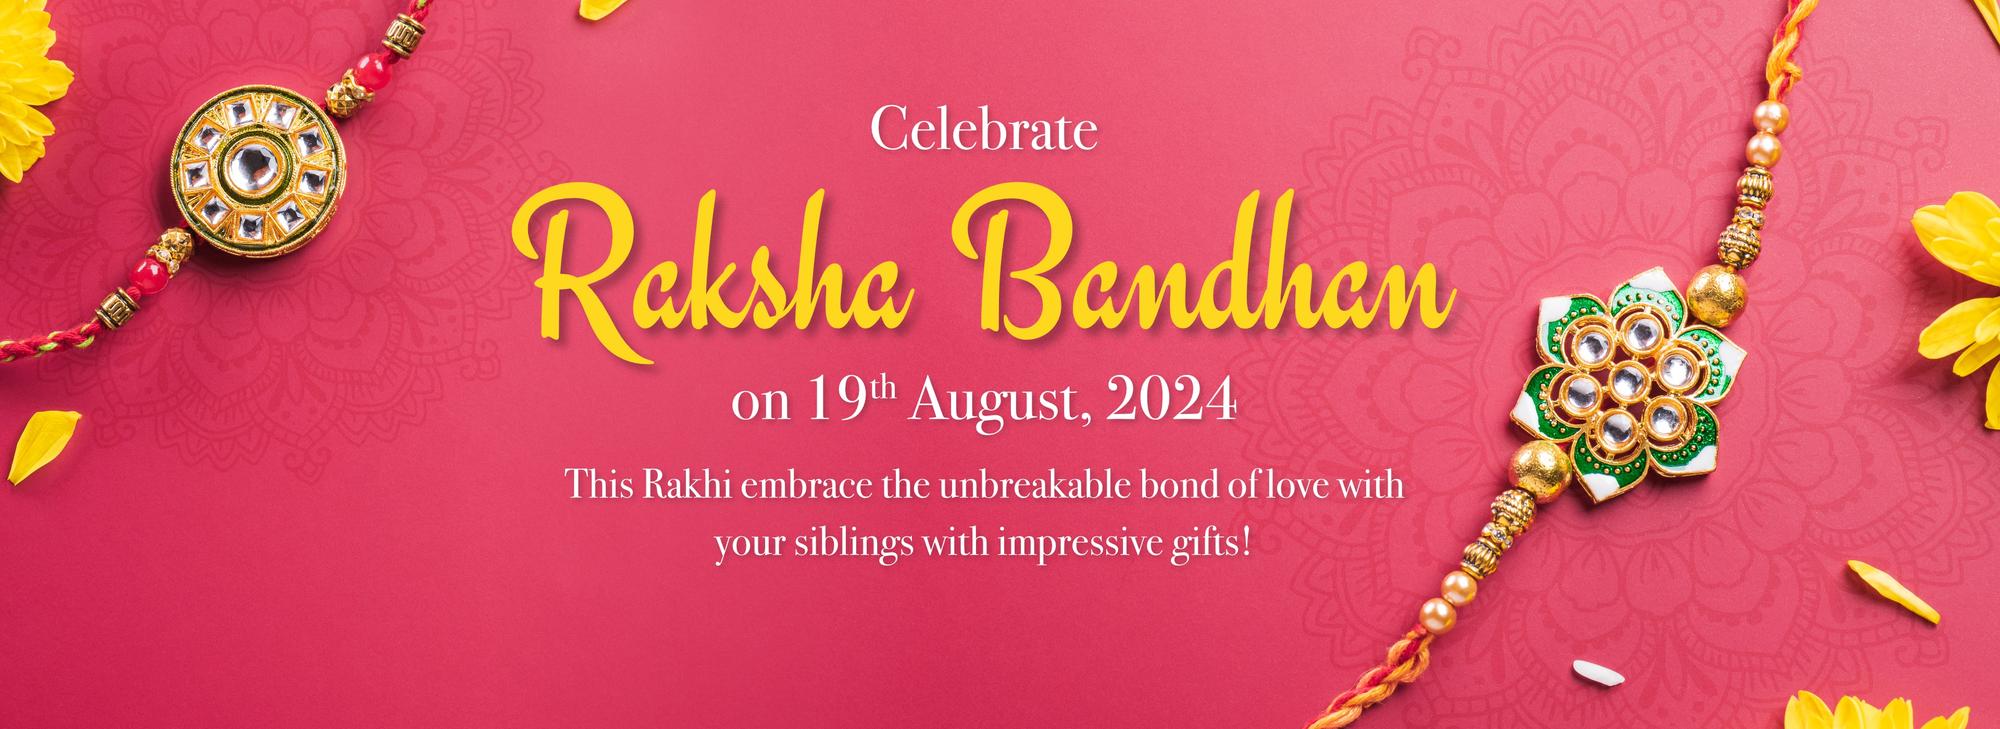 Celebrate Raksha Bandhan on 19th August, 2024